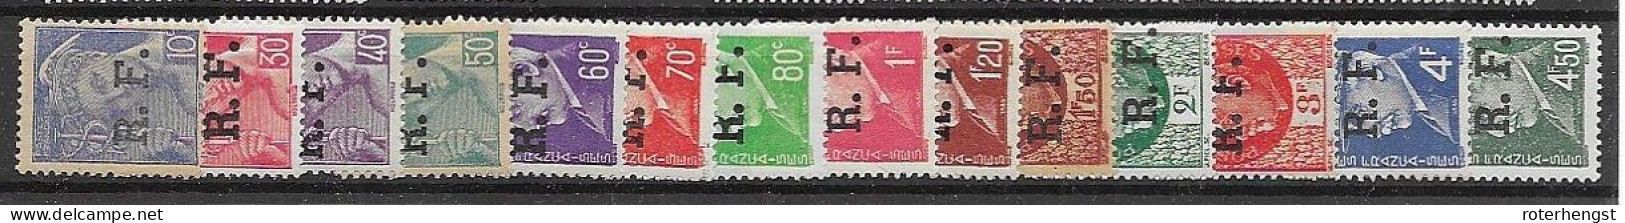 Lyon Liberation Set 14 Stamps (2,40 F Missing) 20 Euros Mnh ** Nsc ** - Kriegsmarken